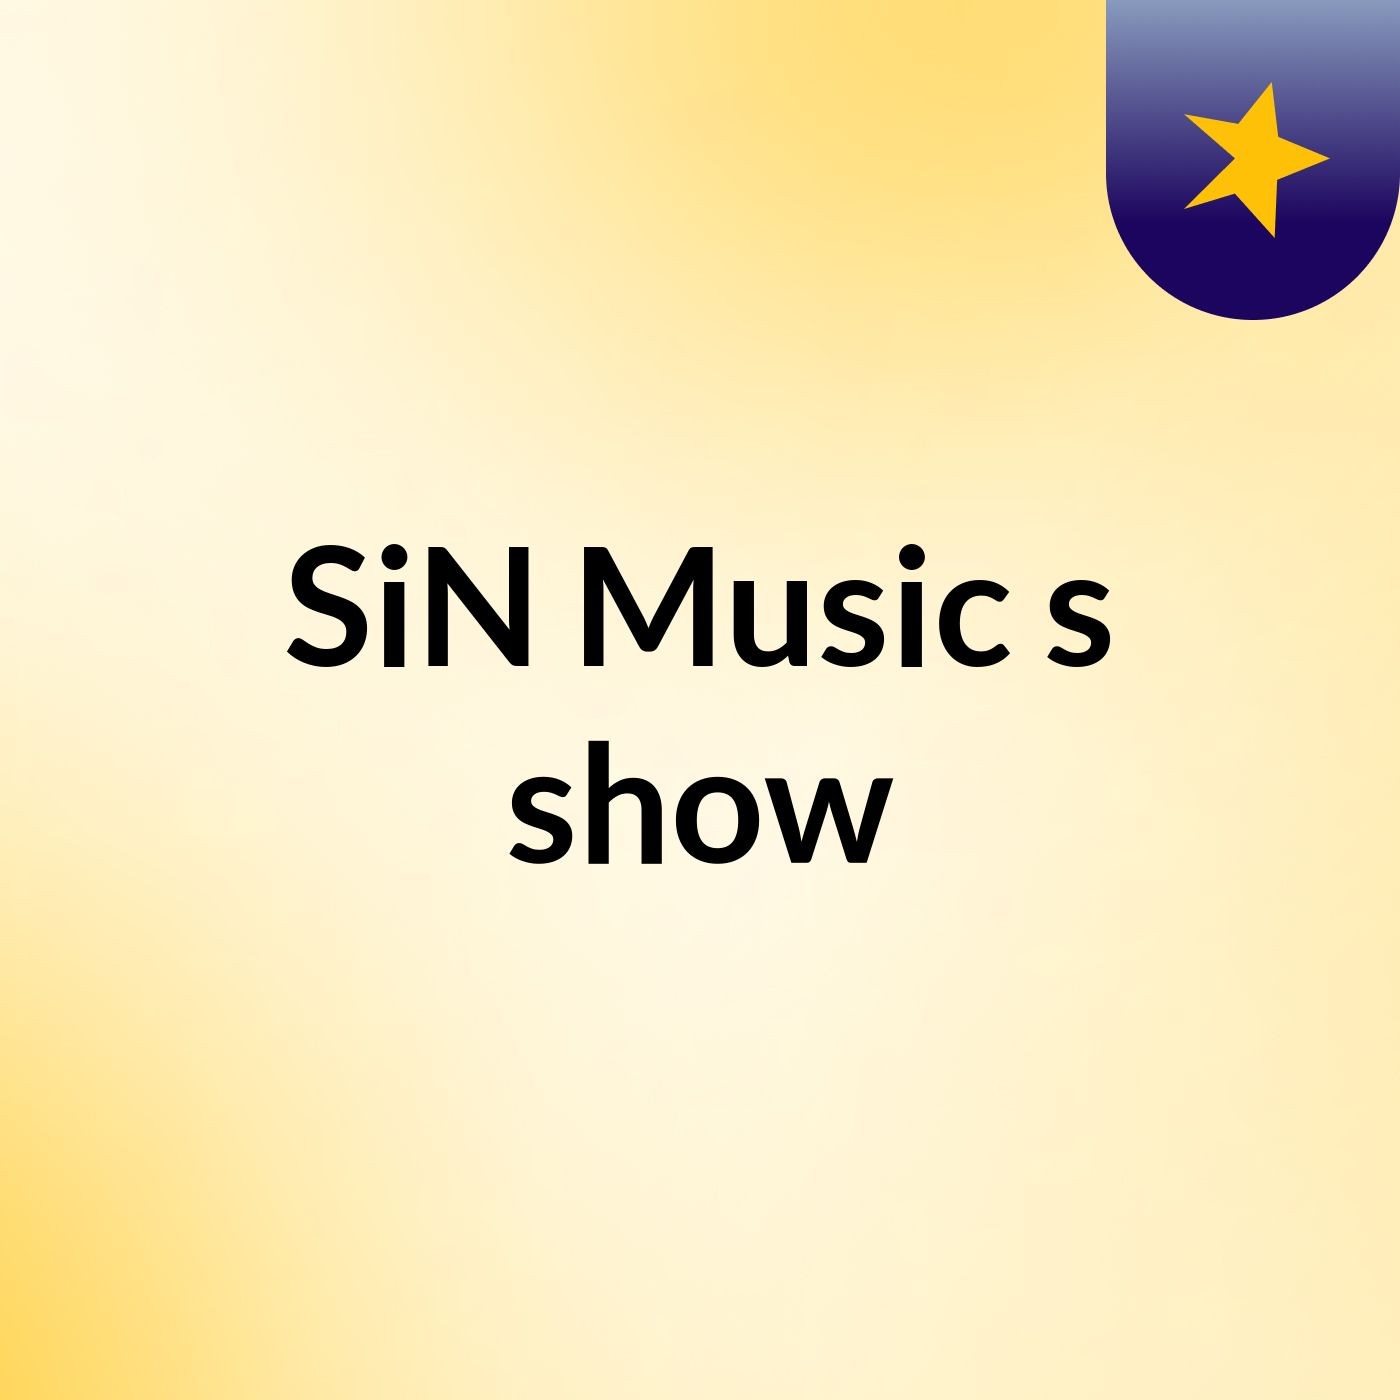 SiN Music's show